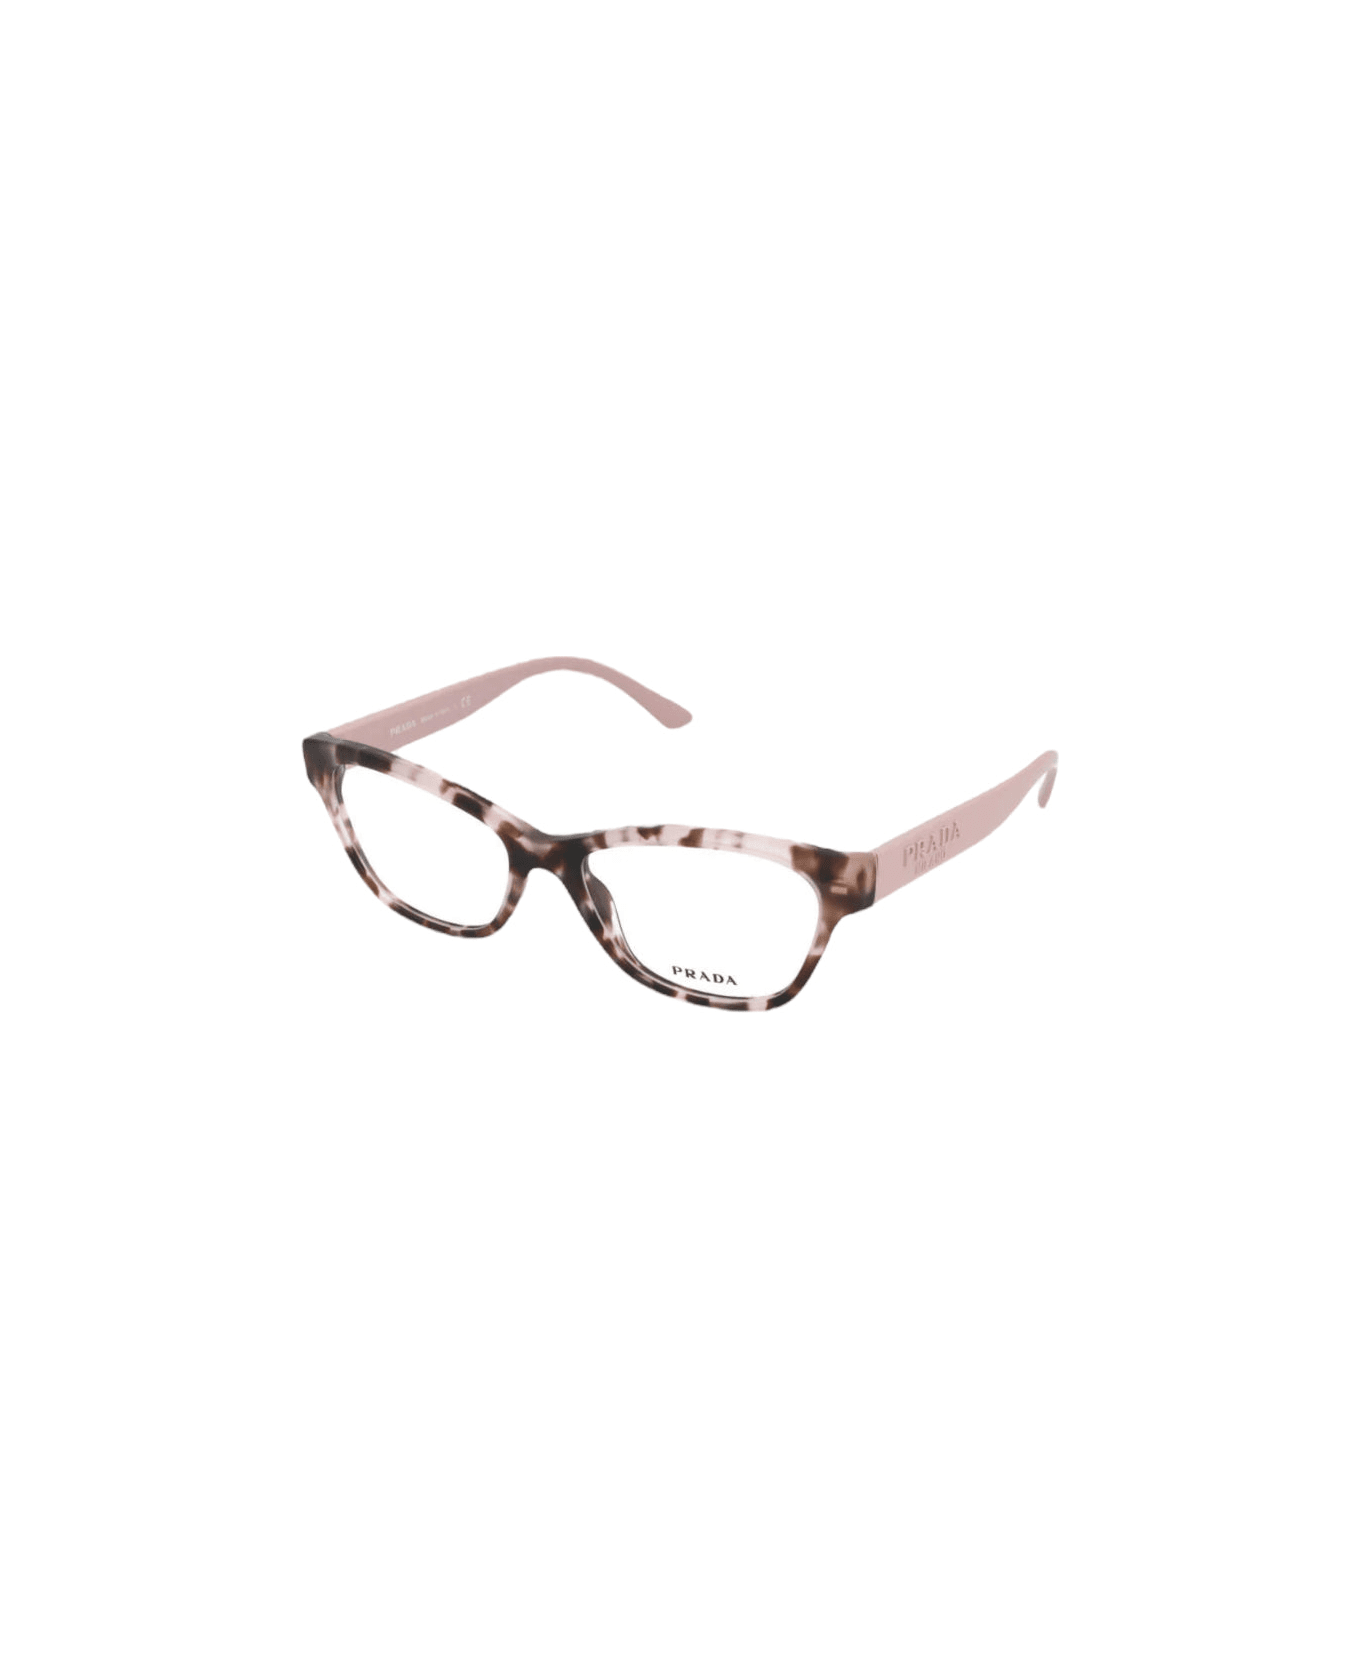 Prada Eyewear Opr 03w Glasses アイウェア